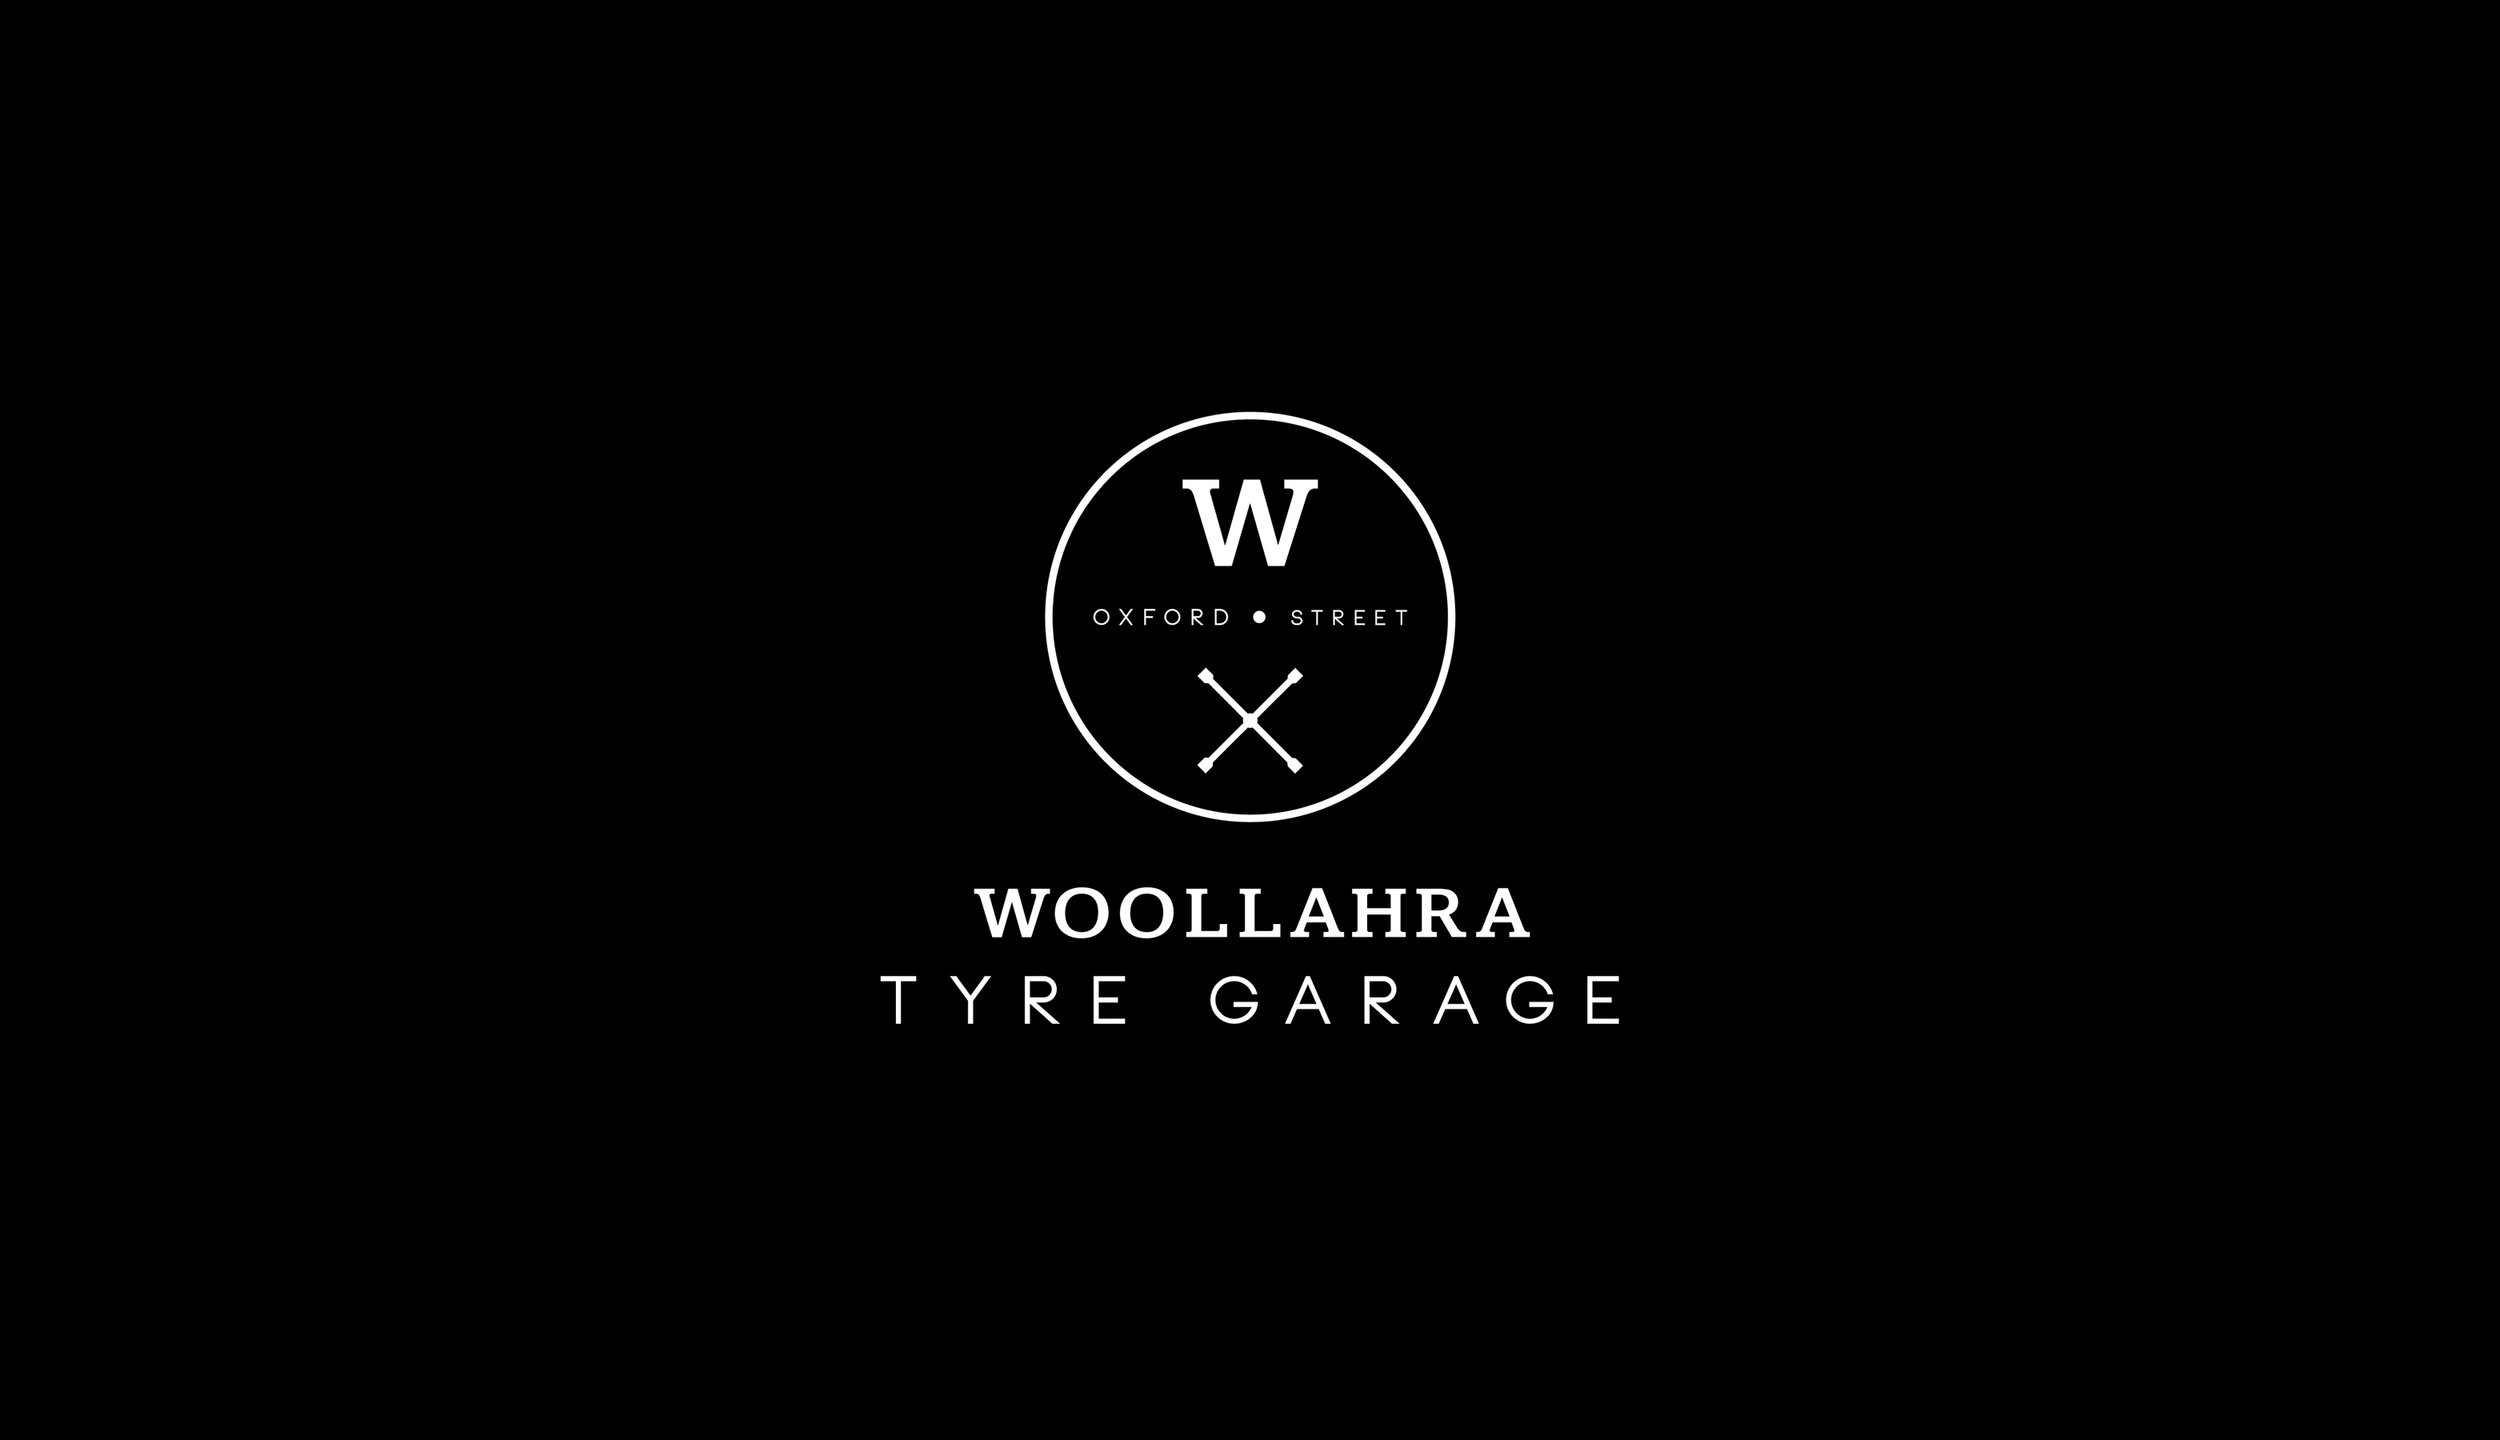 Woollahra Tyre Garage 3.jpg